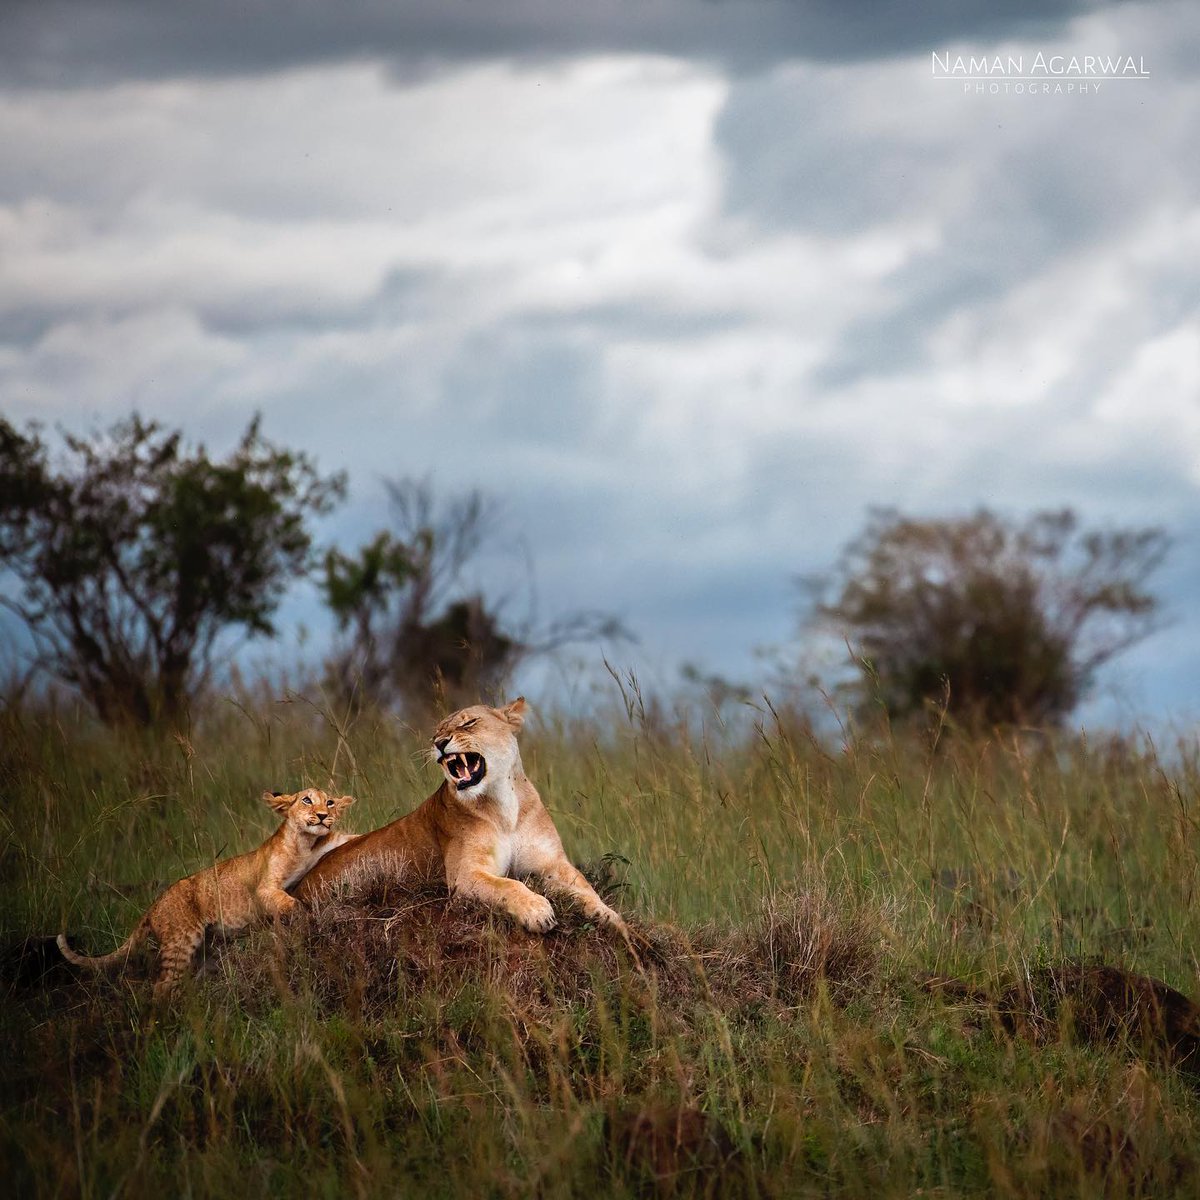 One evening at Topi Plains, a playful cub tries to please his angry mother with that innocent smile.

#lions #lionsofmasaimara #lionsofkenya #lionsofafrica #lionlove #masaimara #masaimaranationalpark #kenya #kenyanviews #kenyatourism #kenyawildlife